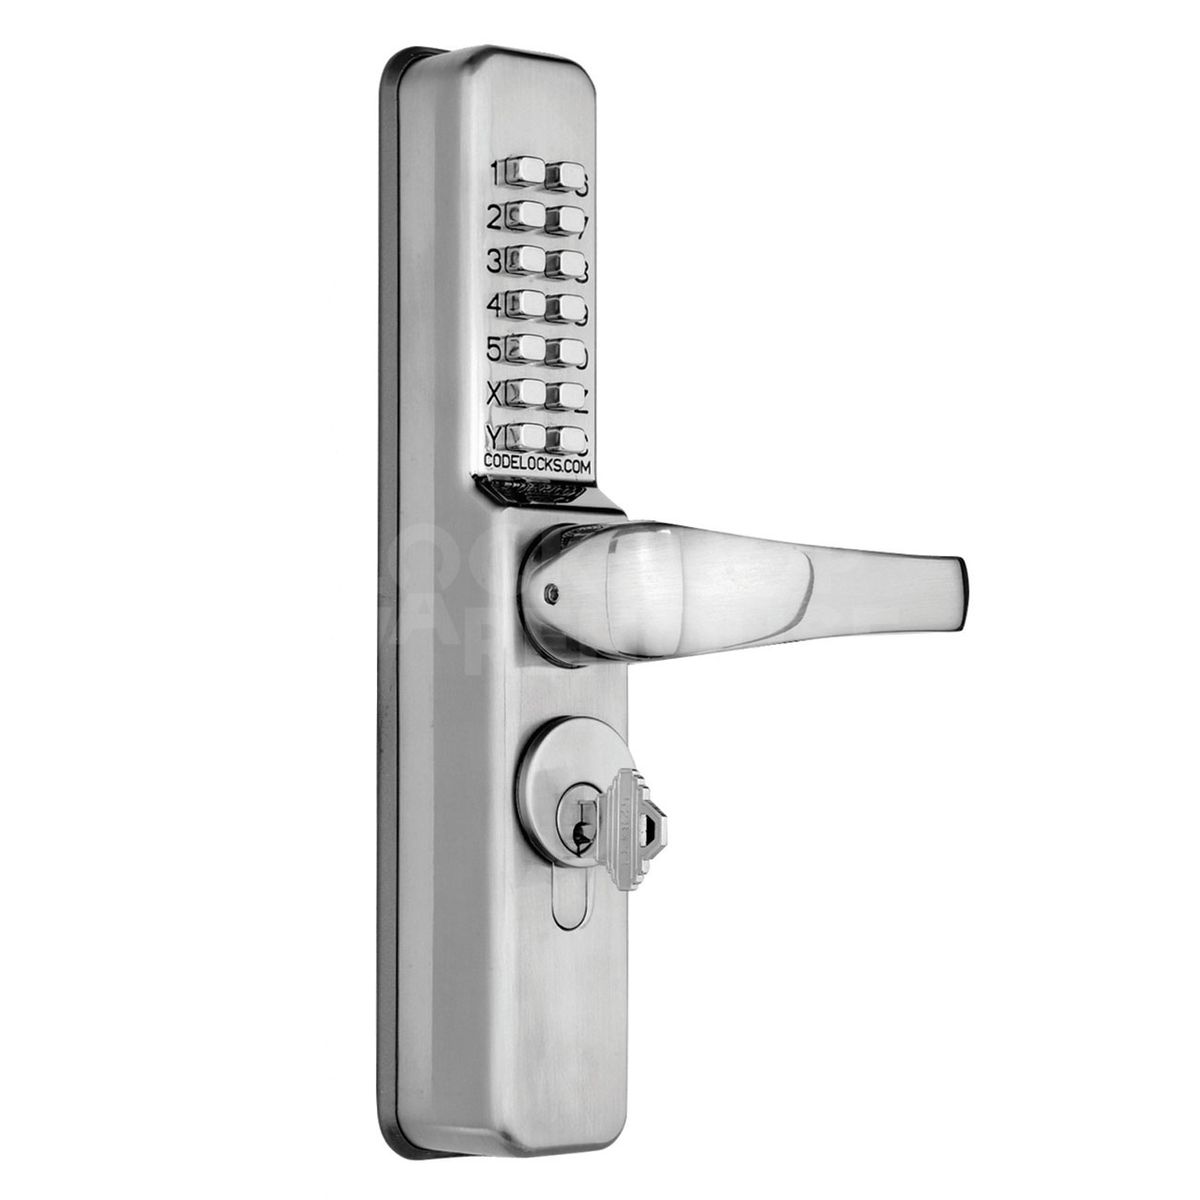 Codelock Narrow Style Digital Code Locks